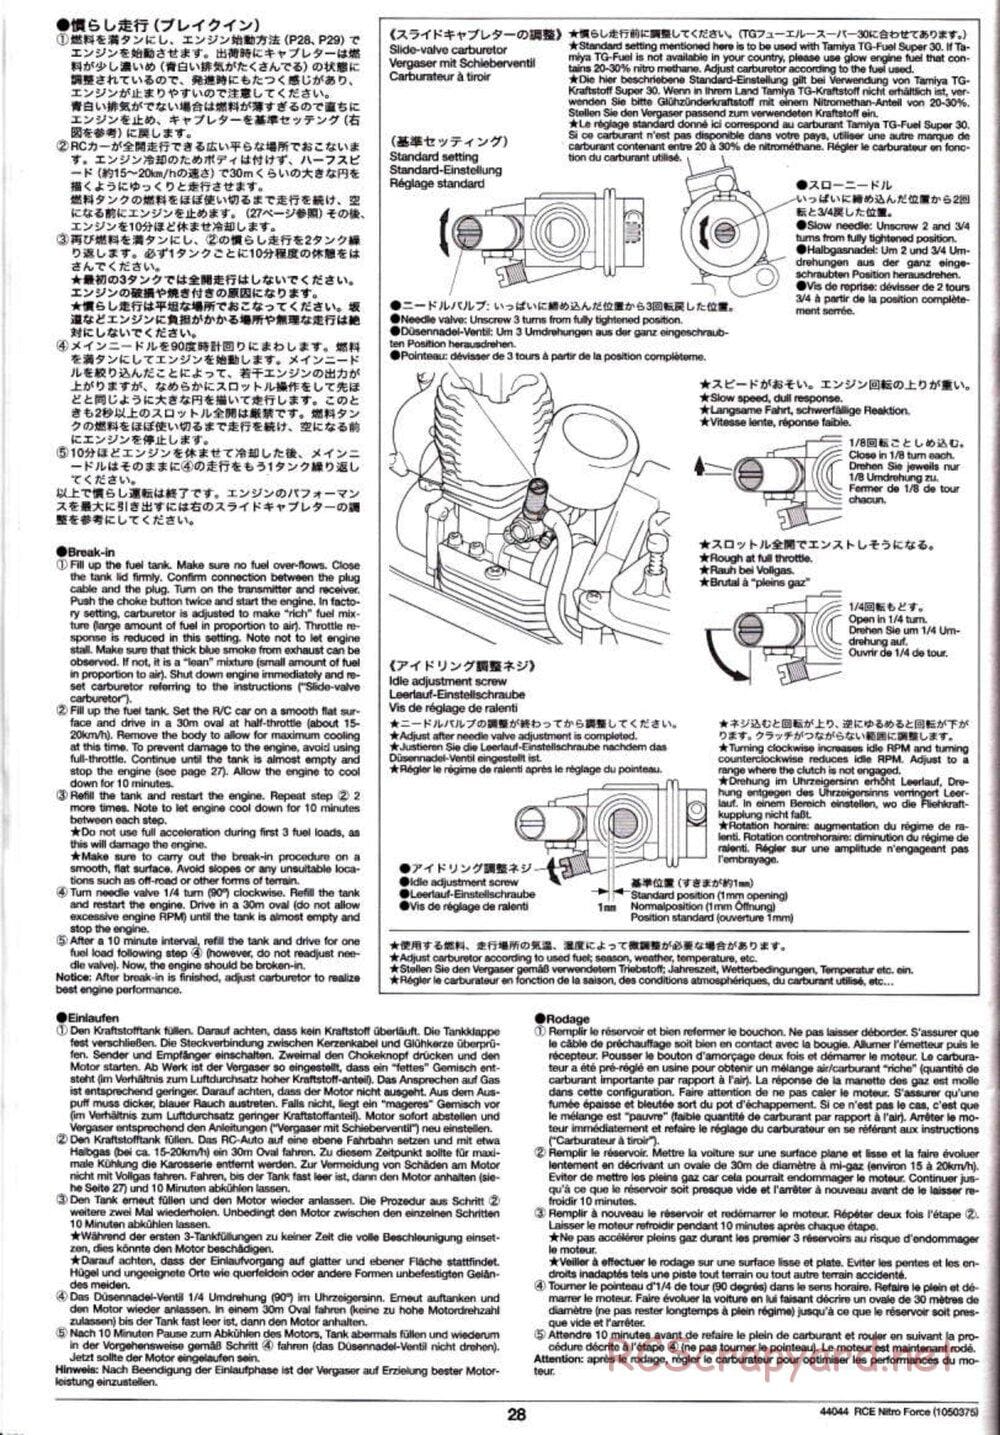 Tamiya - Nitro Force - NDF-01 Chassis - Manual - Page 28